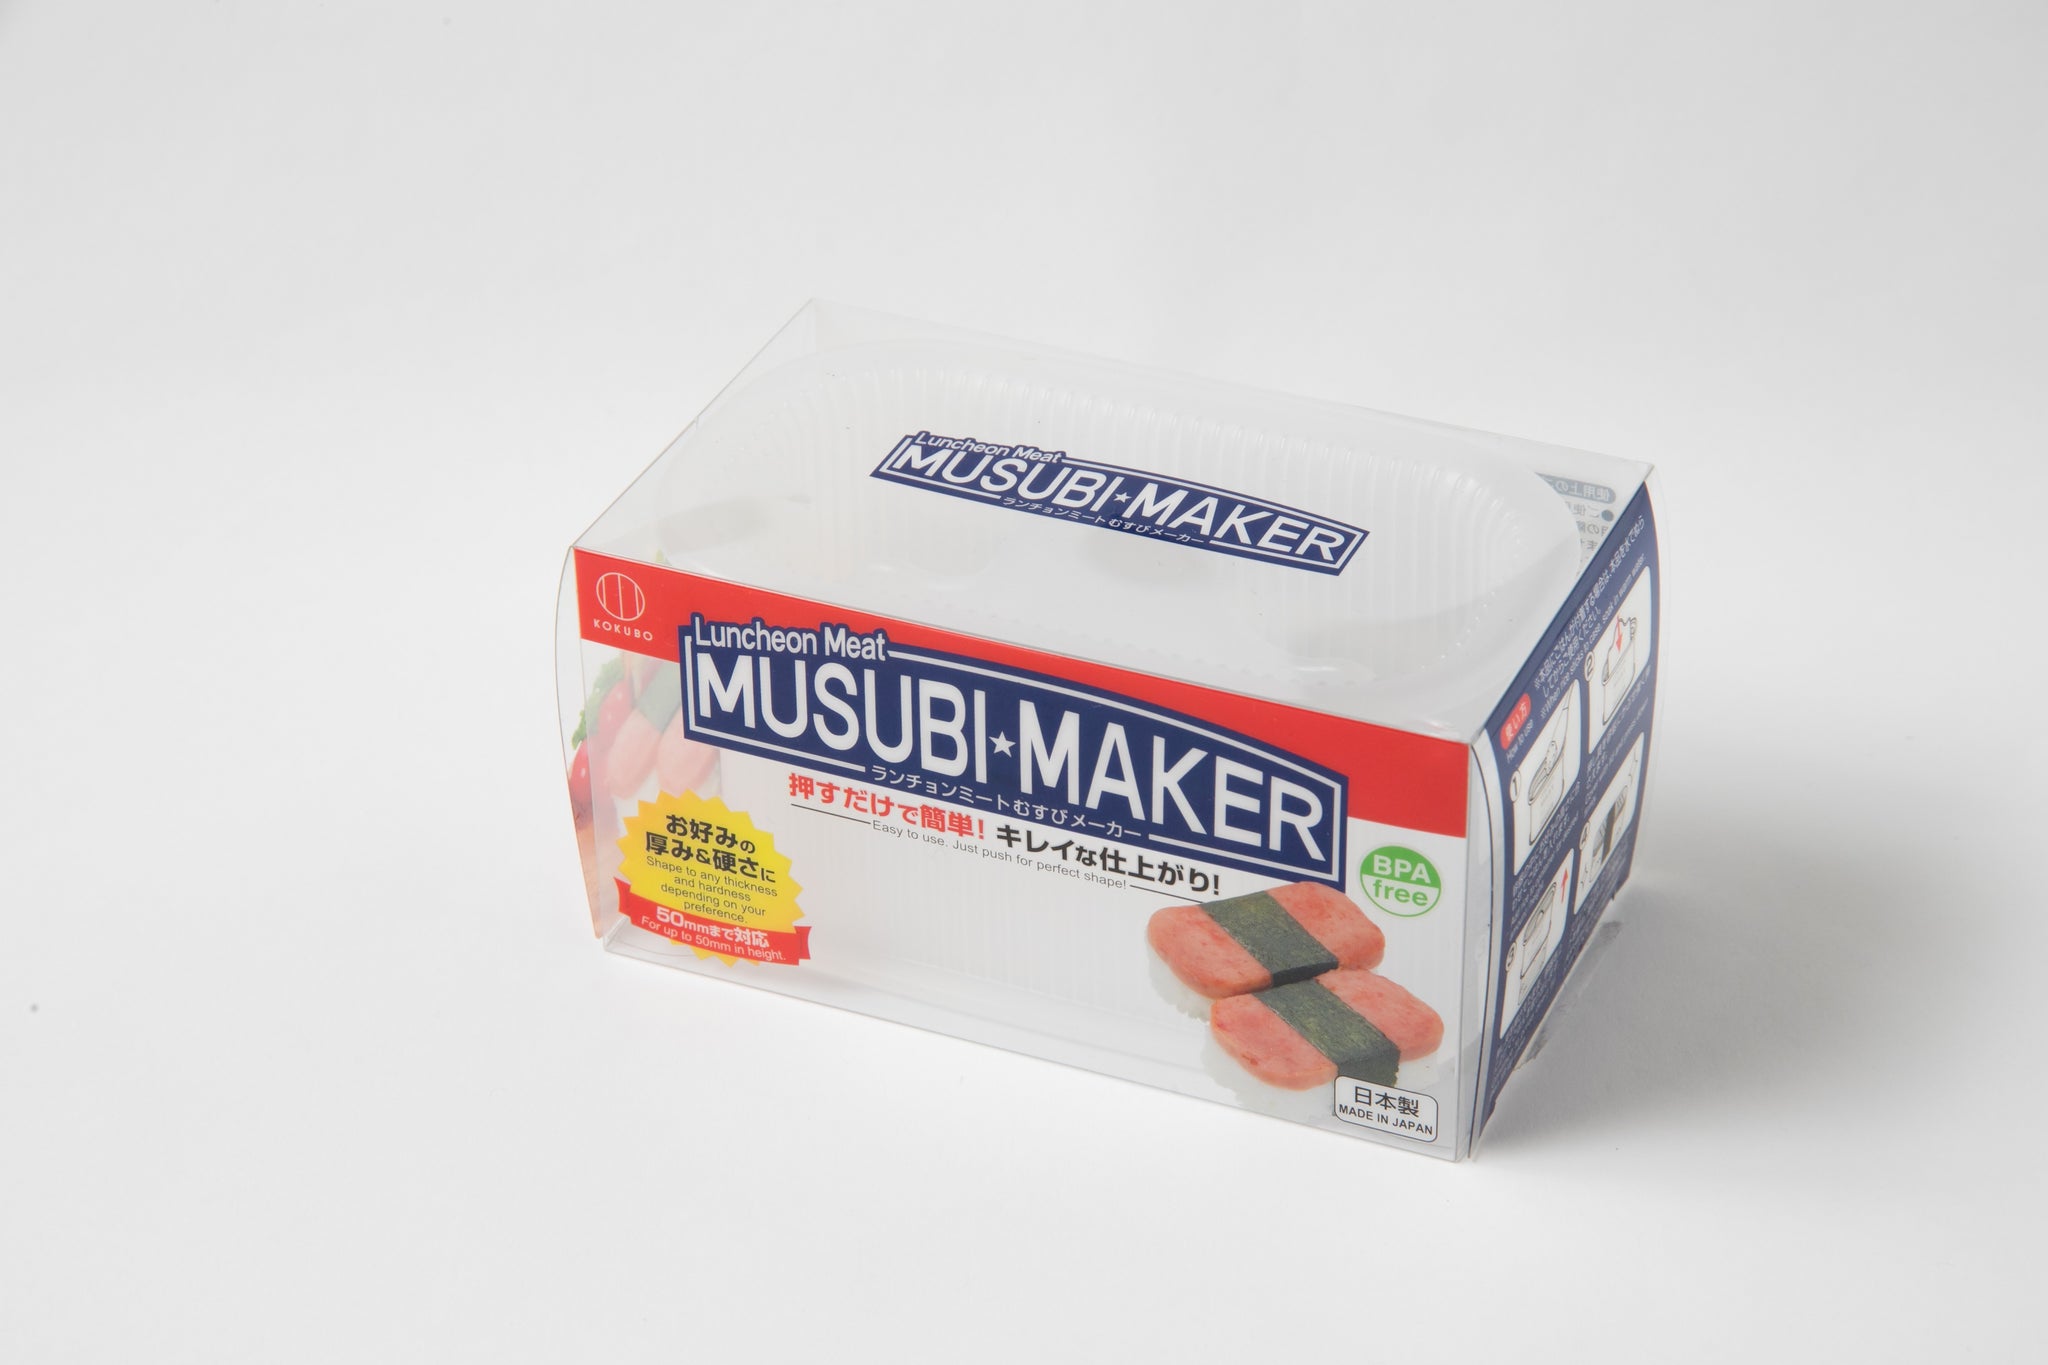 Musubi Maker Kit,2 Acrylic Musubi Mold and 1 Luncheon Meat Slicer